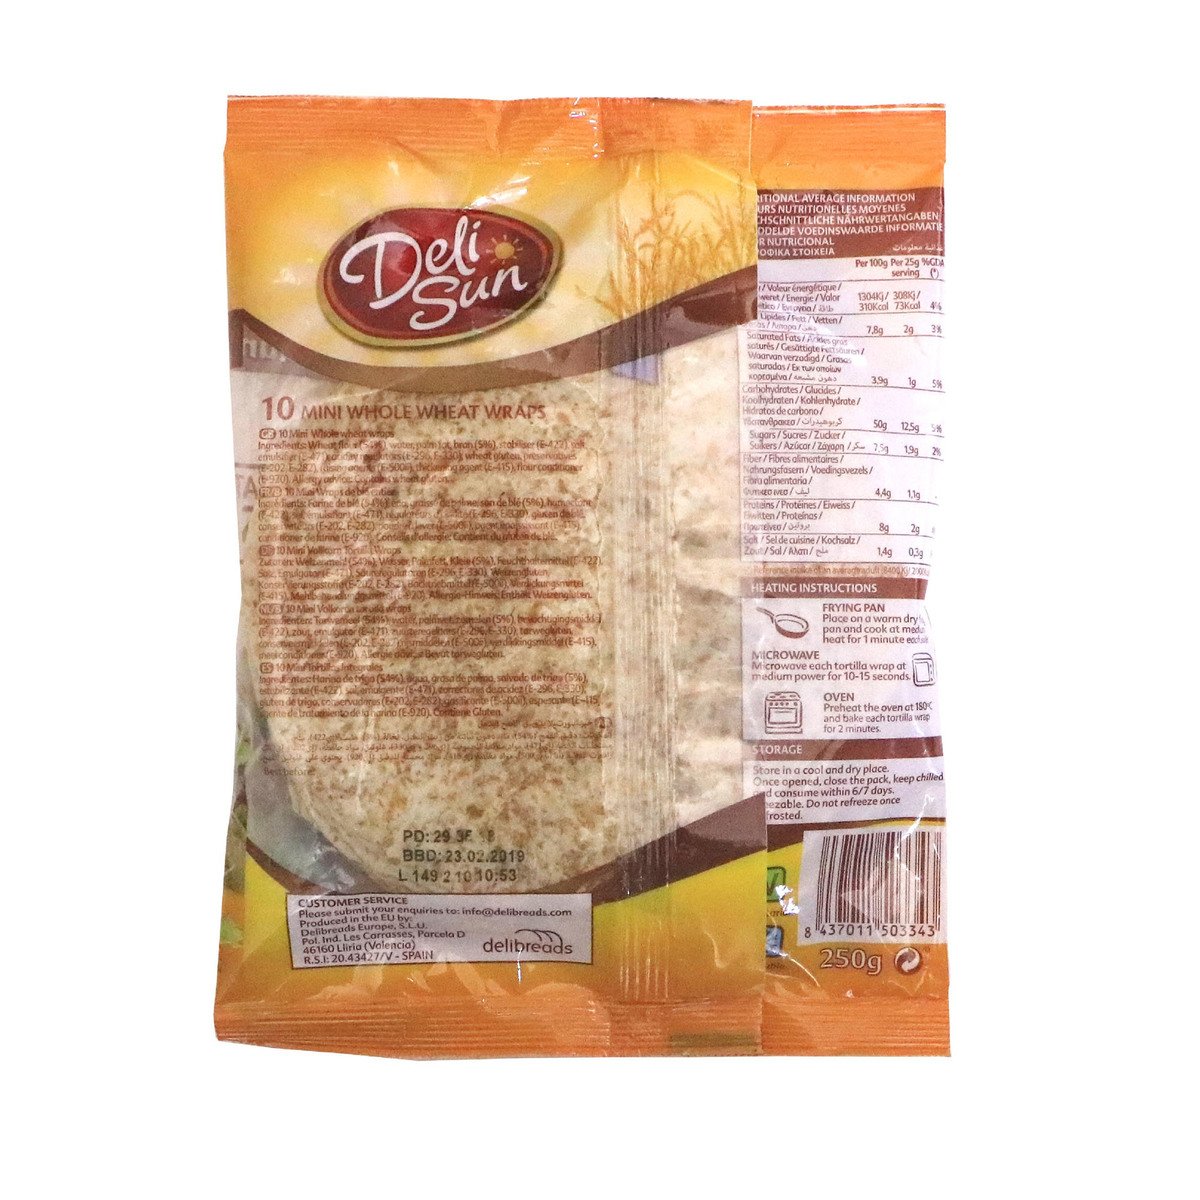 Deli Sun Mini Whole Wheat Wraps 10pcs